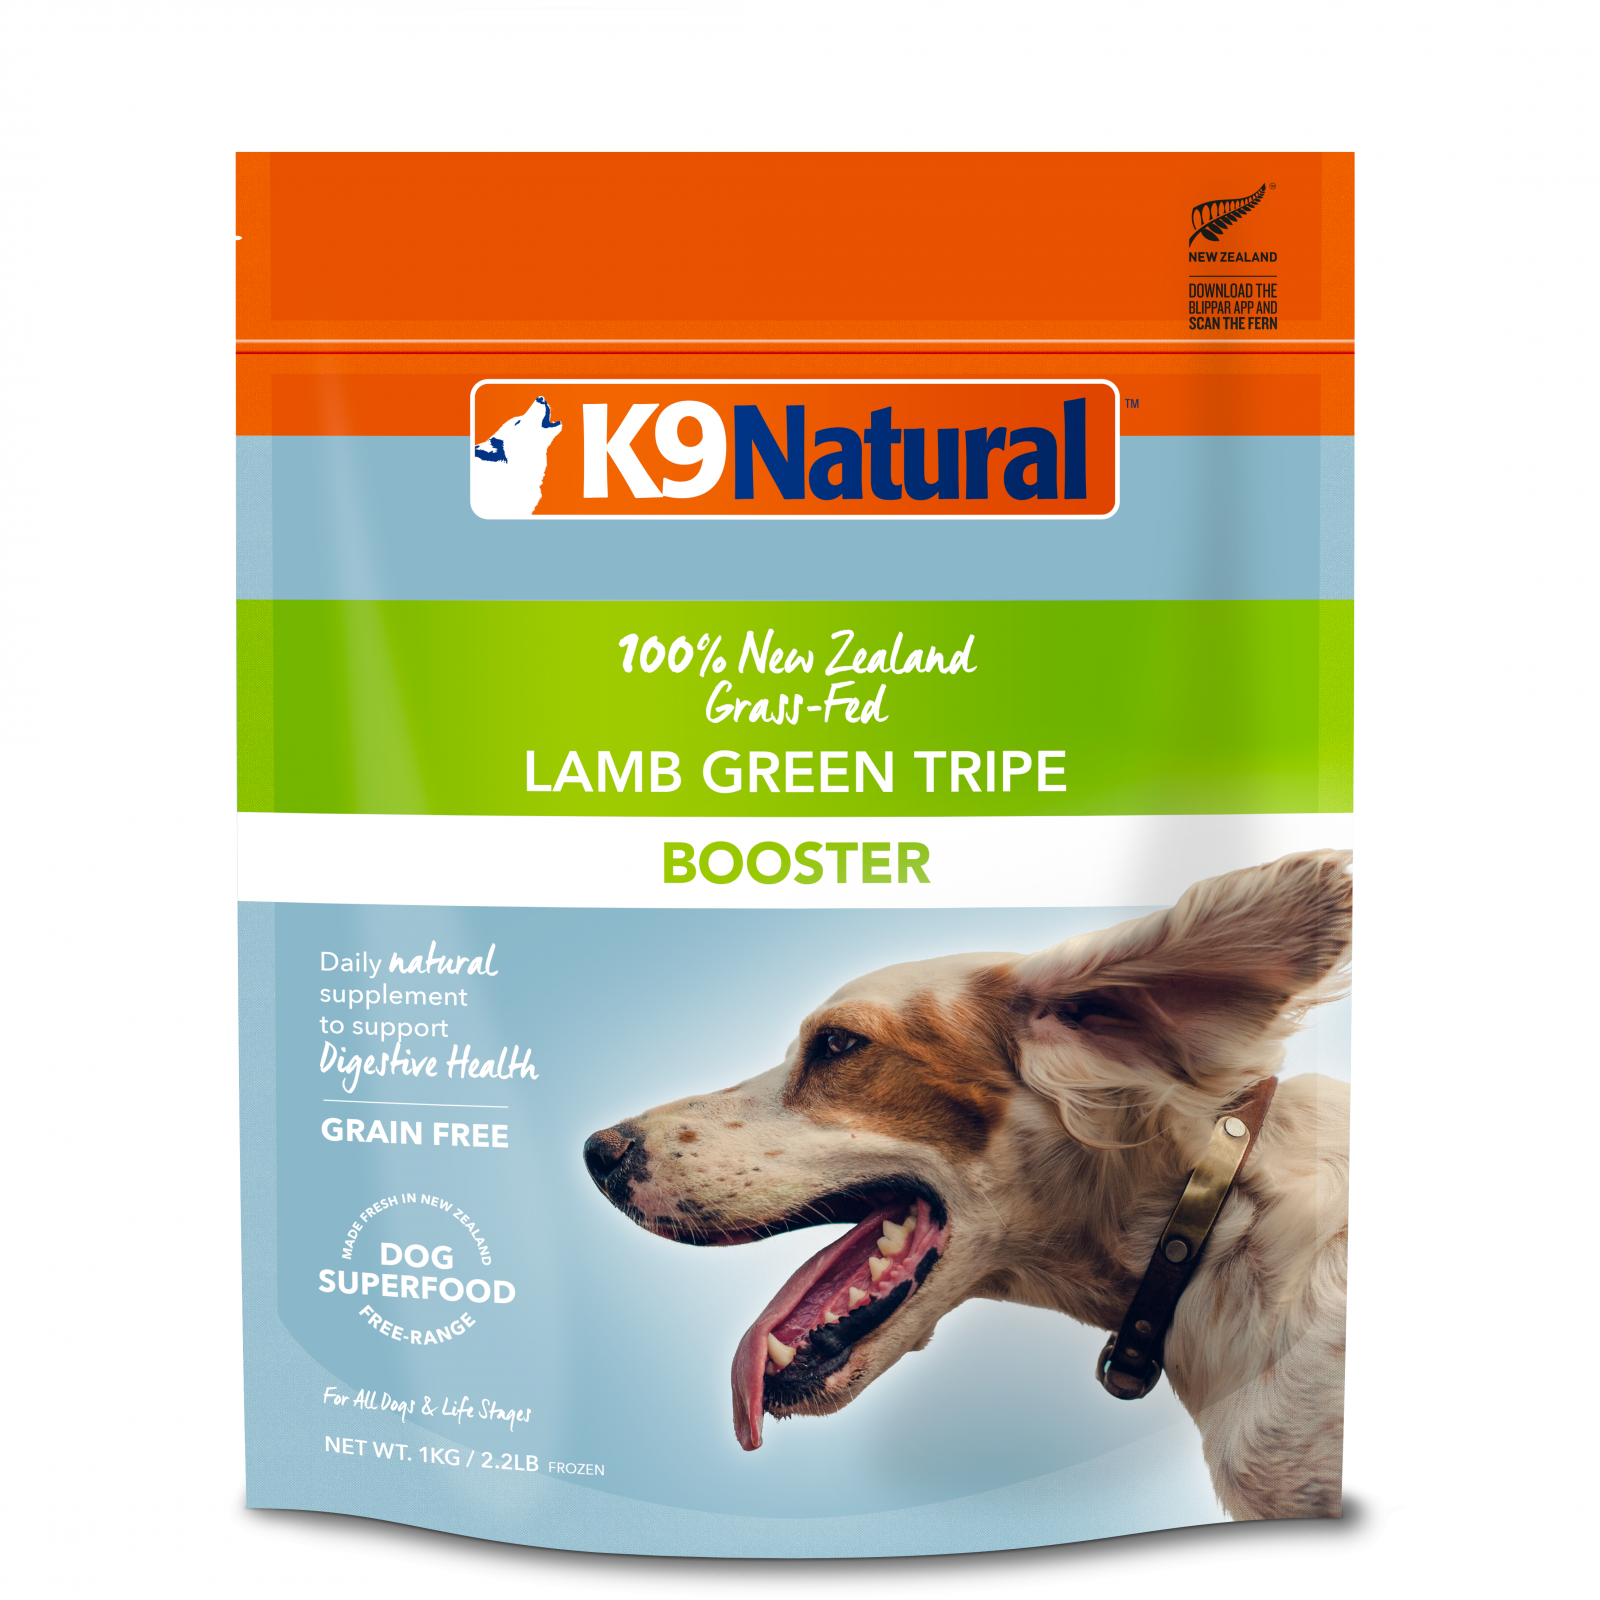 K9 Natural Frozen Food K9 Natural Lamb Green Tripe Booster Frozen 1kg